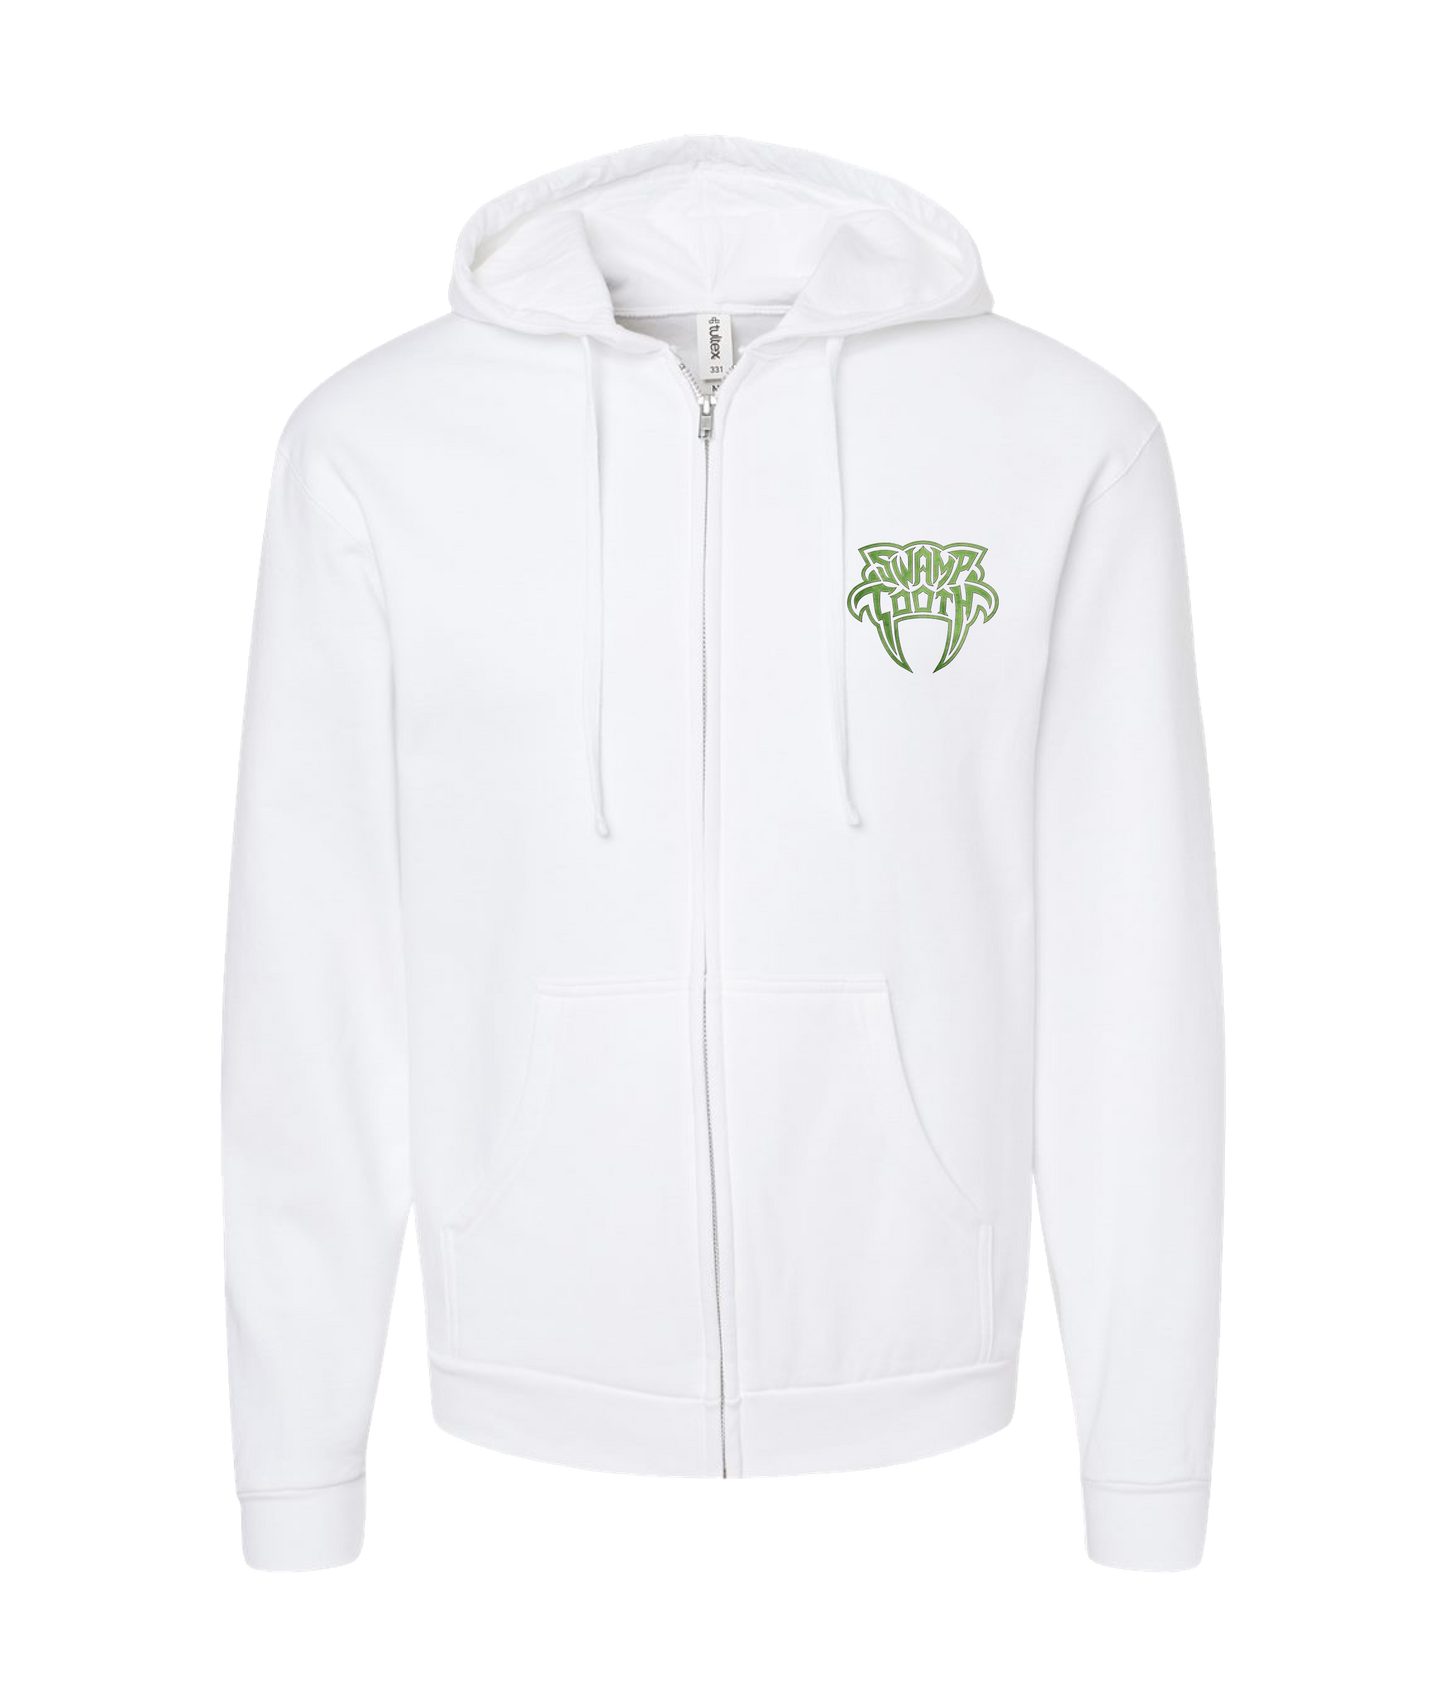 Swamp Tooth - Logo - White Zip Up Hoodie